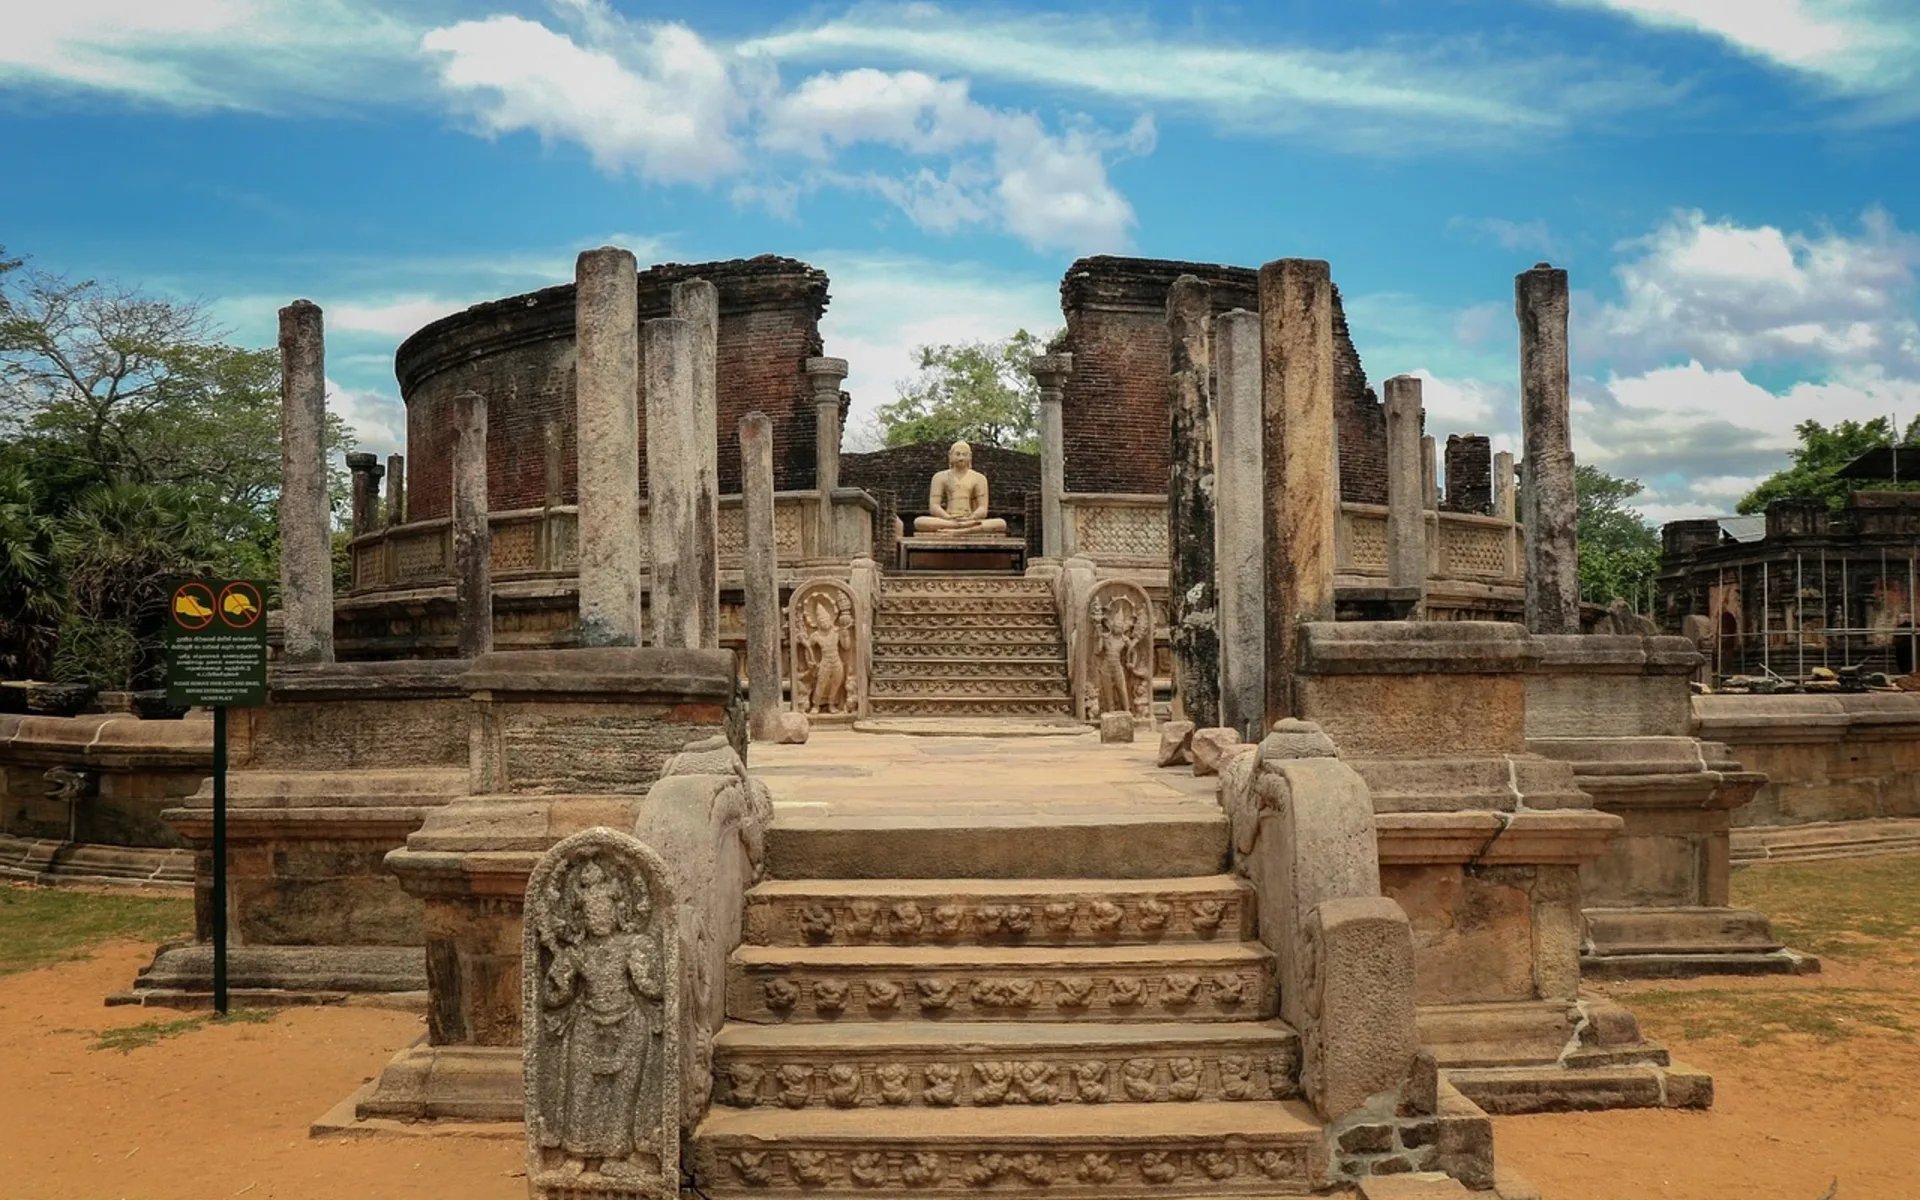 The ancient temple at Polonnaruwa.